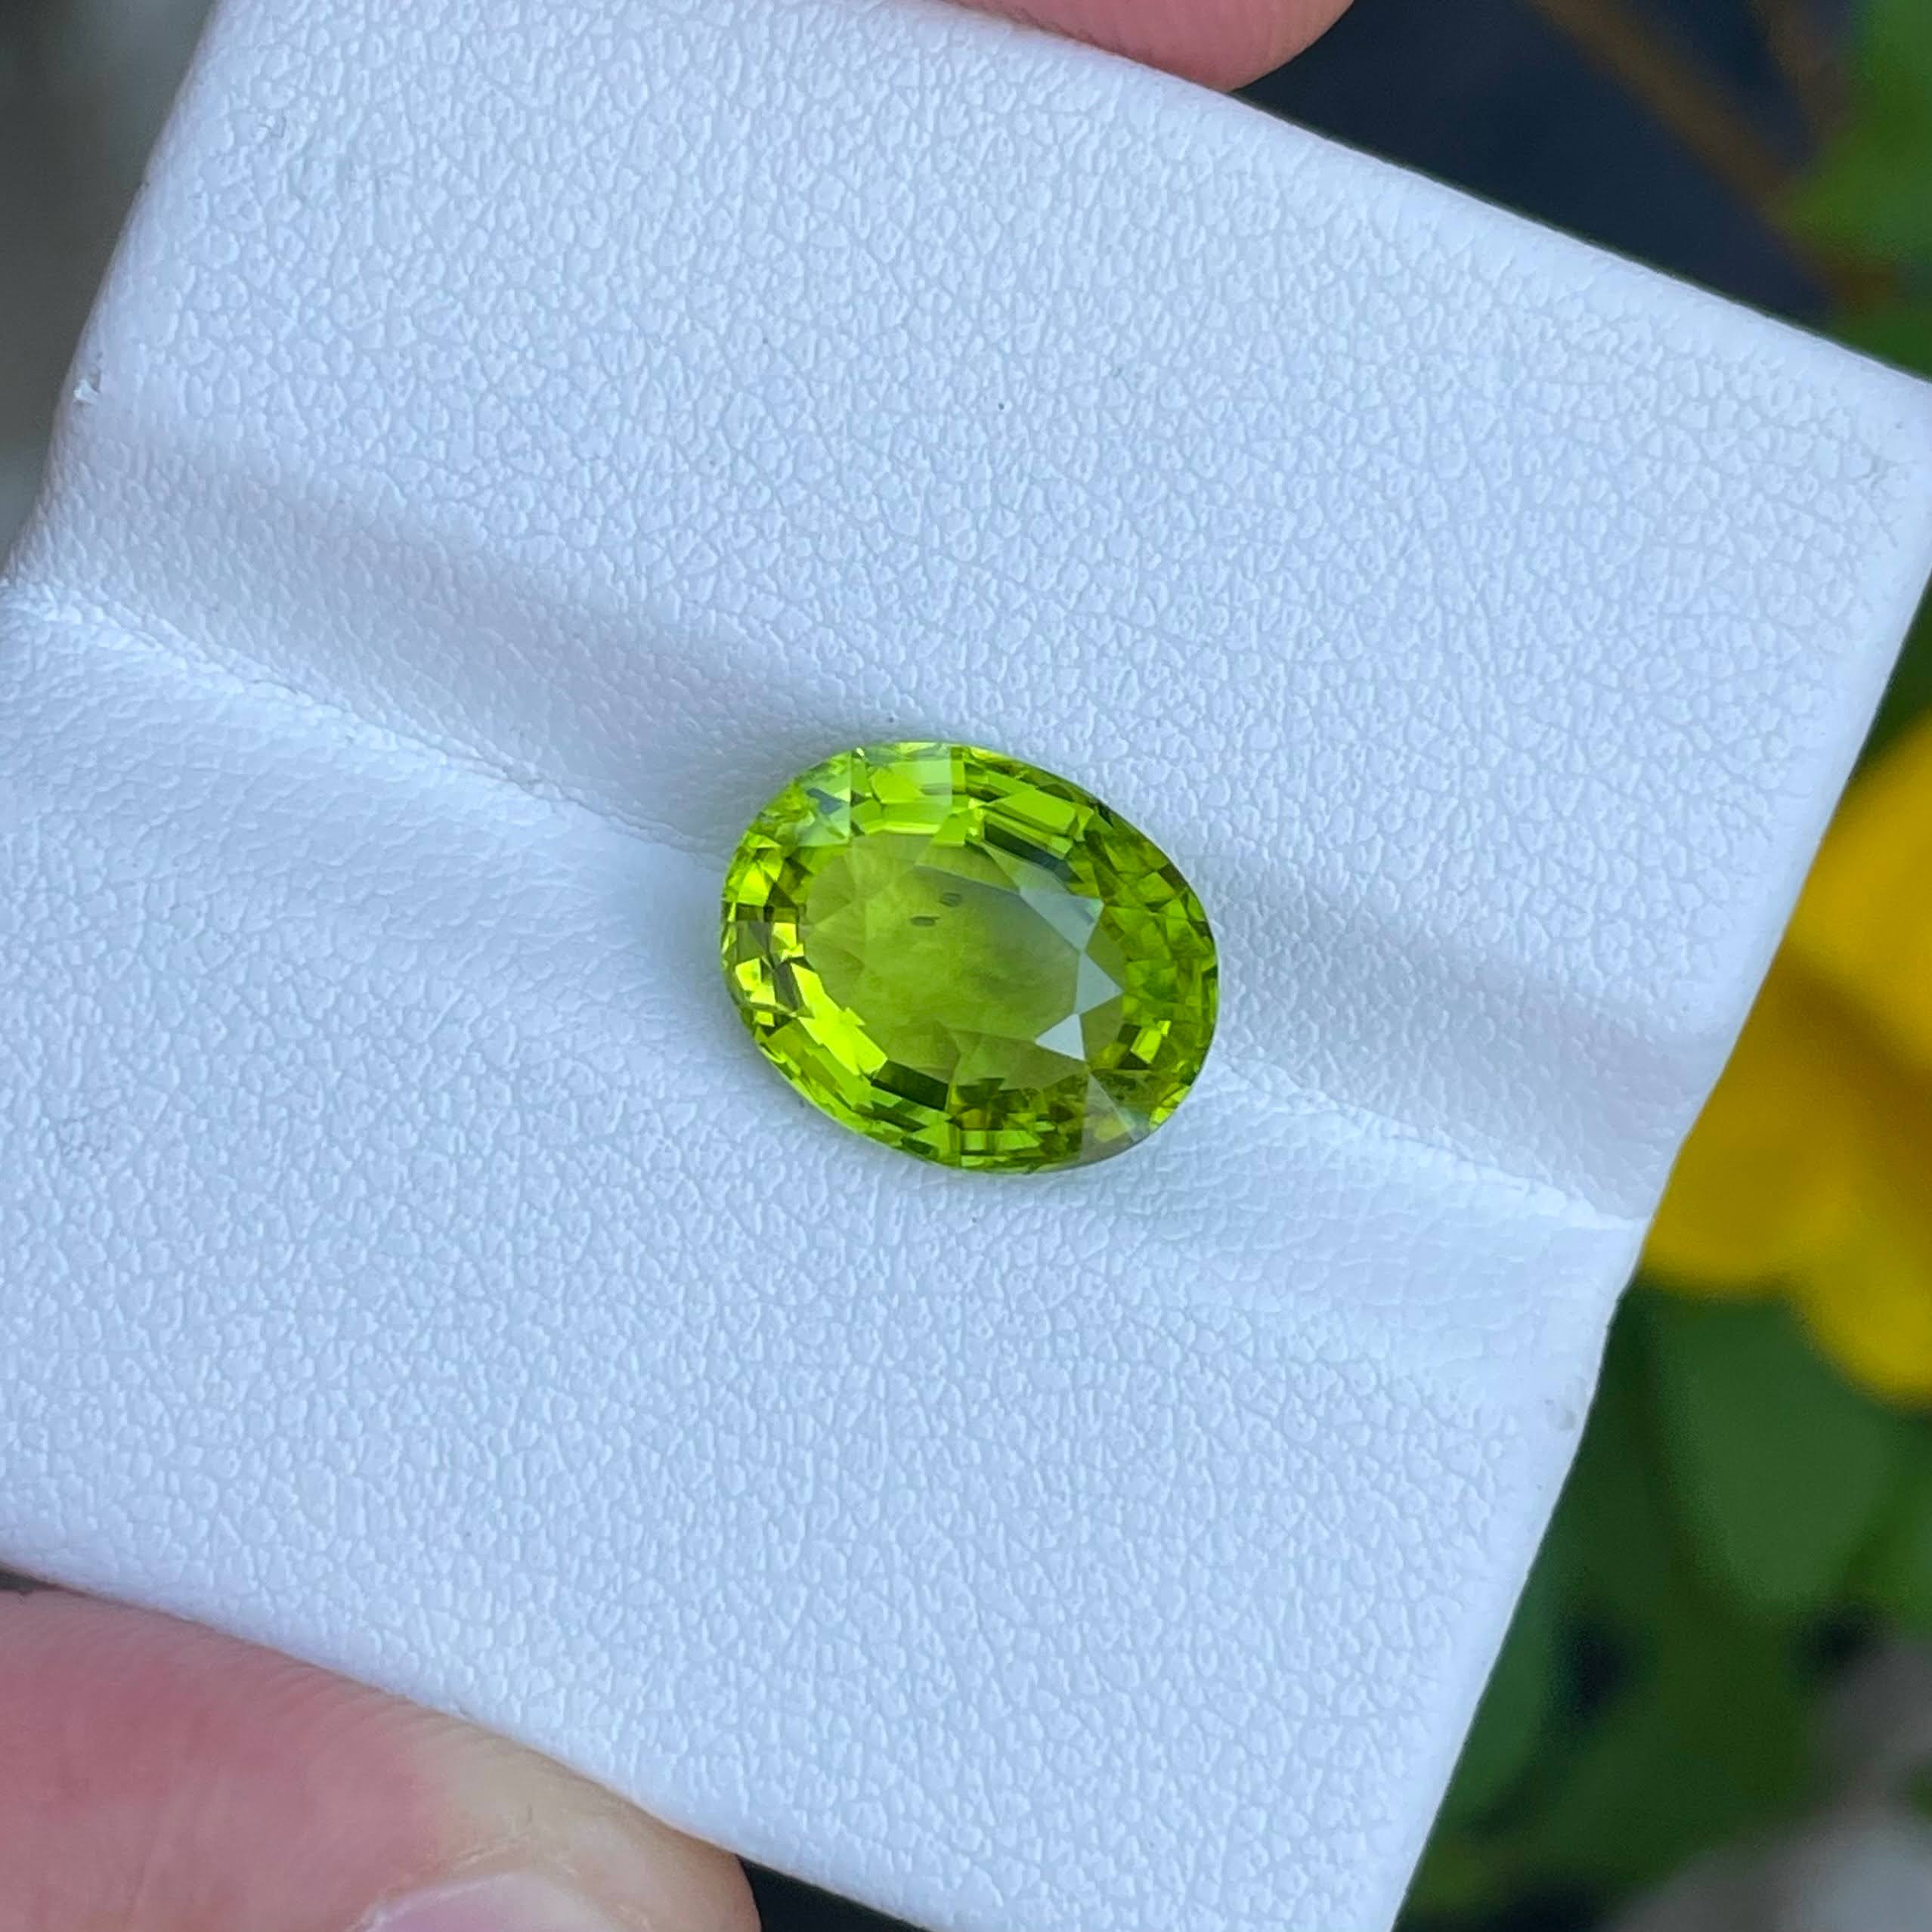 4.55 carats Green Peridot Stone Oval Cut